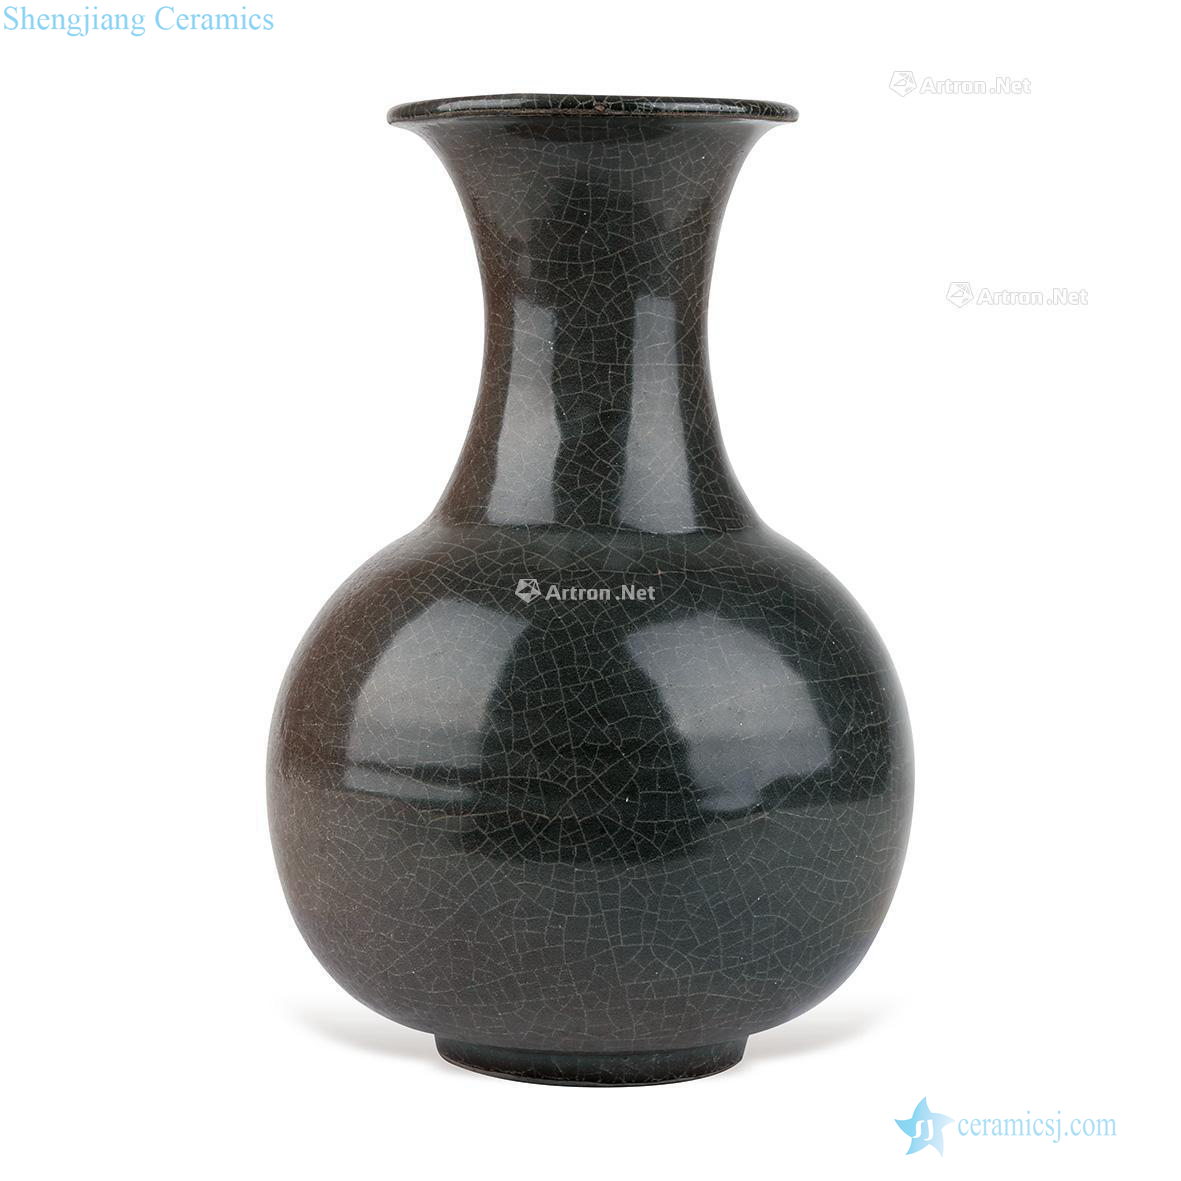 The song dynasty Longquan celadon plum bottle